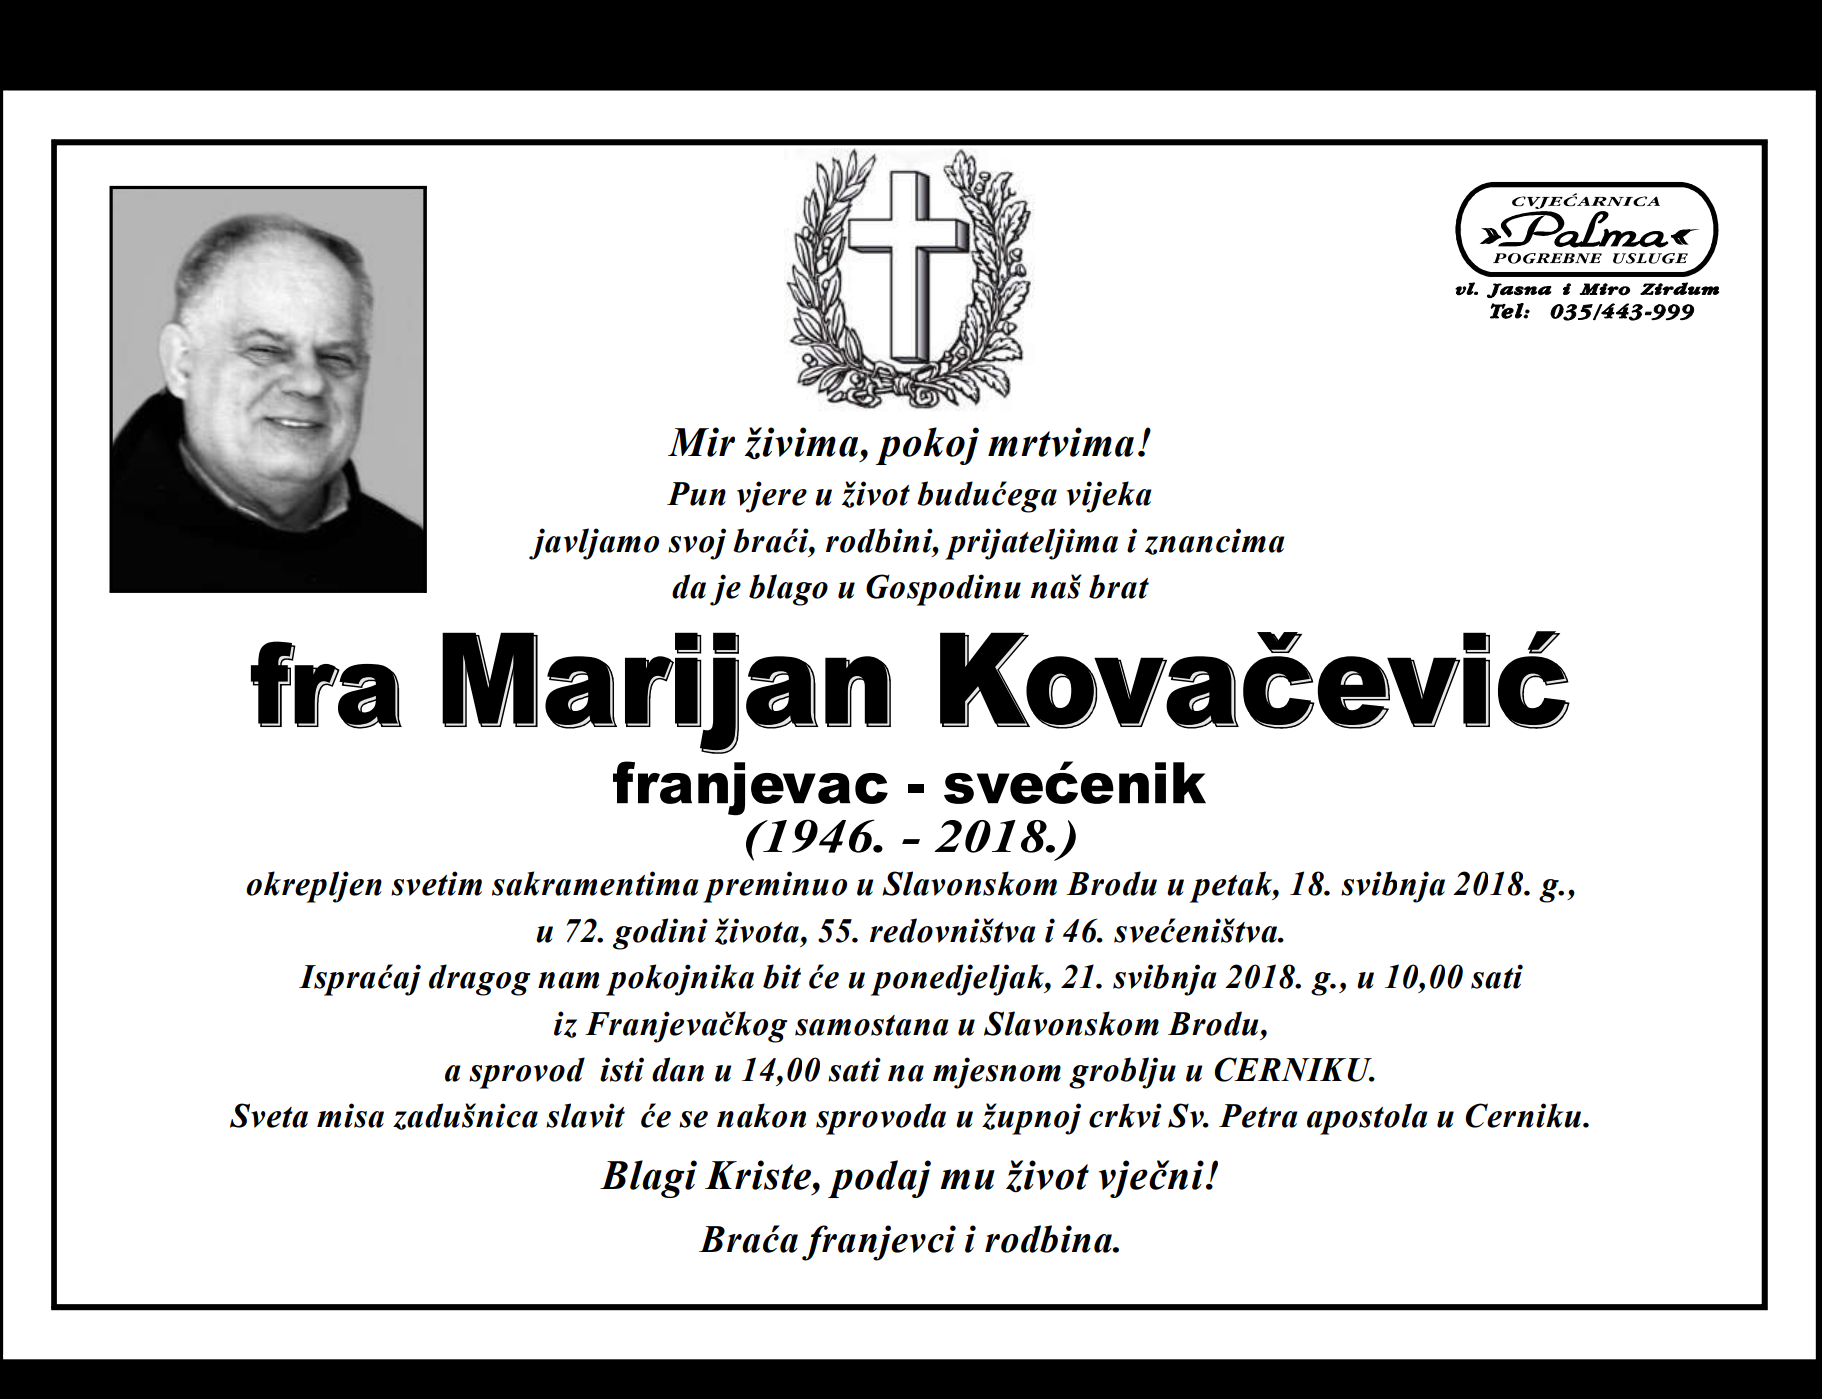 In memoriam – fra Marijan Kovačević